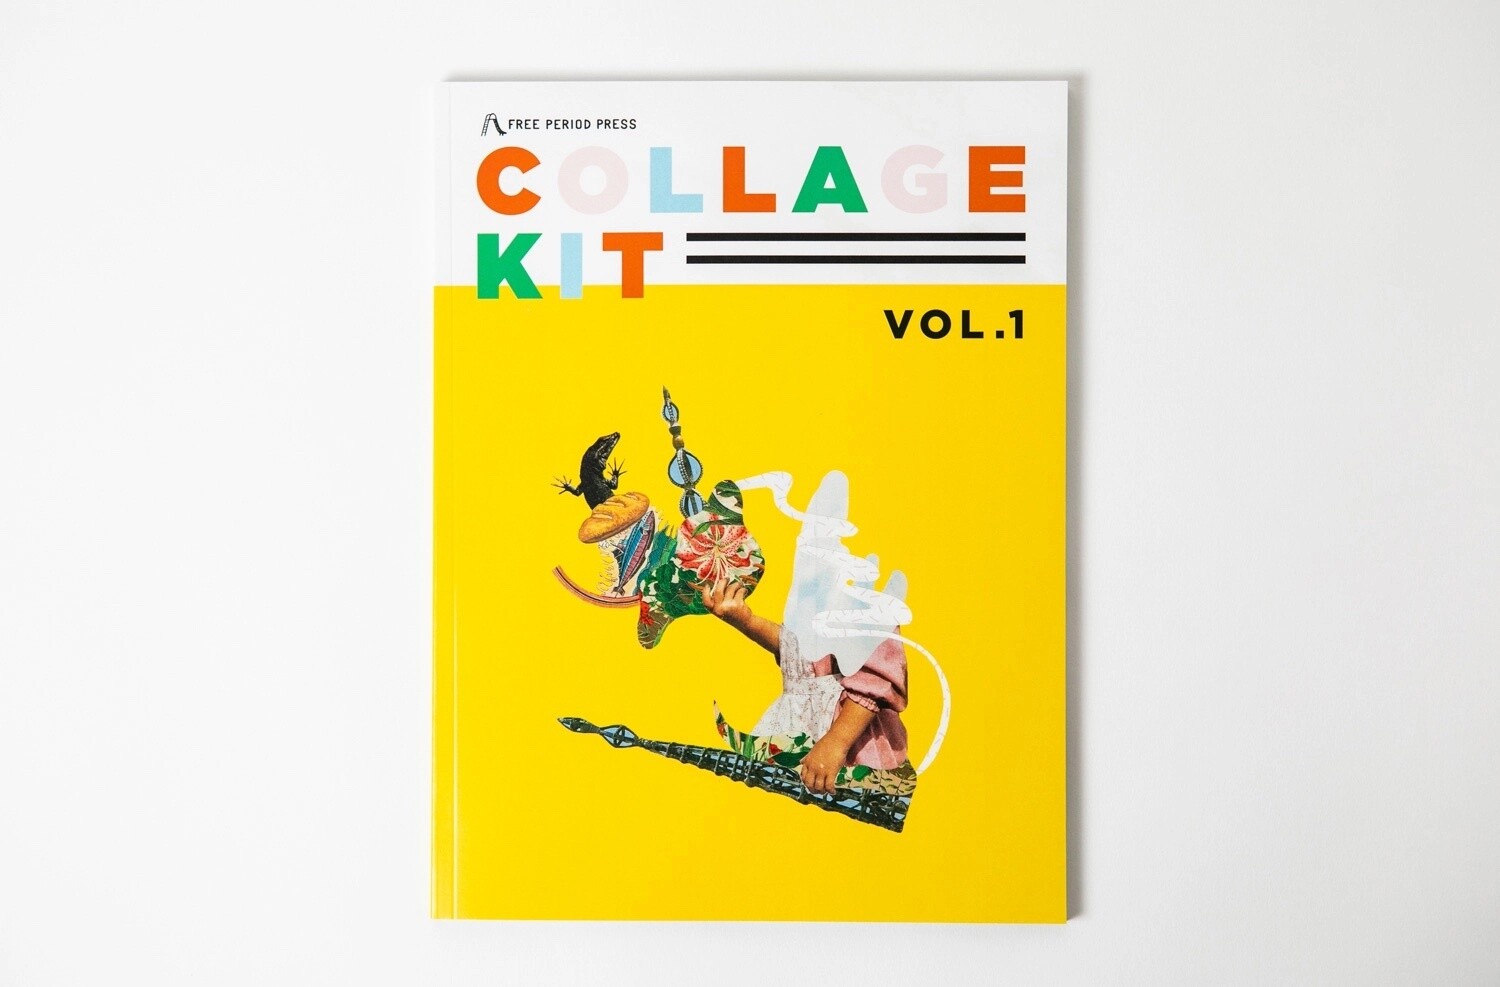 Collage Kit Magazine #1, by Free Period Press